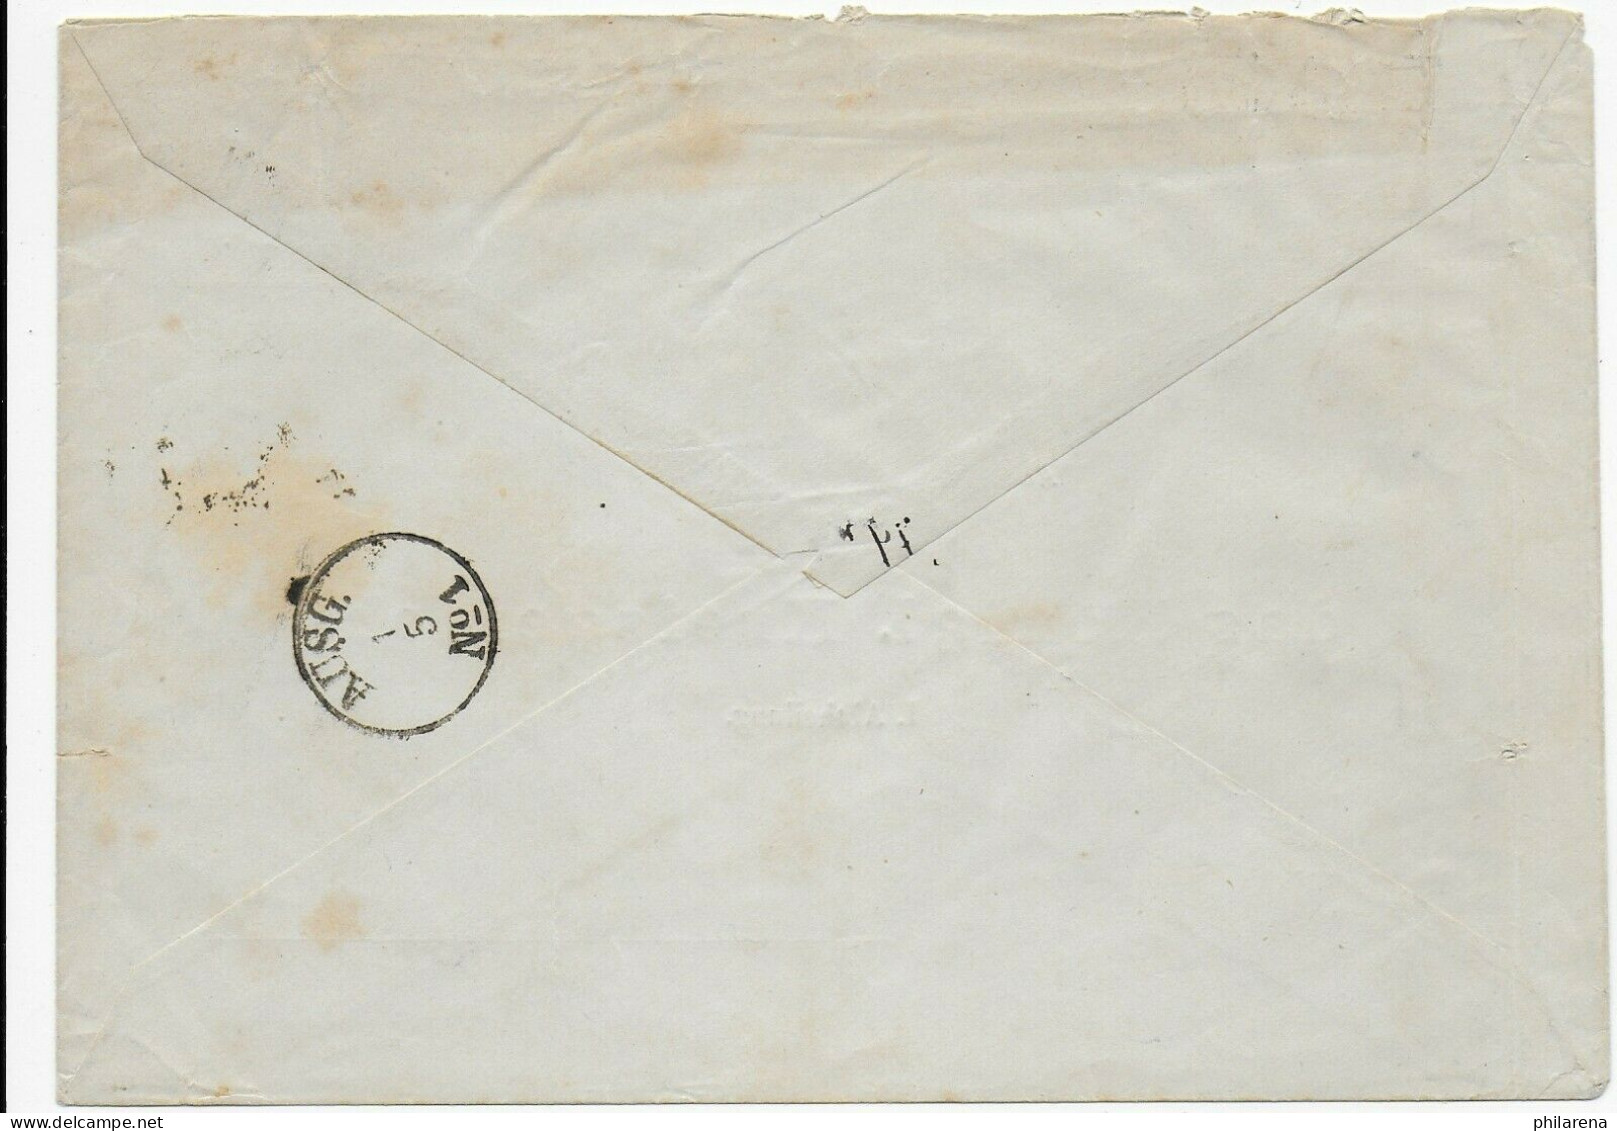 Danzig, Portomarken, 1875 An Das Königl. Kreisgericht Butow - Briefe U. Dokumente